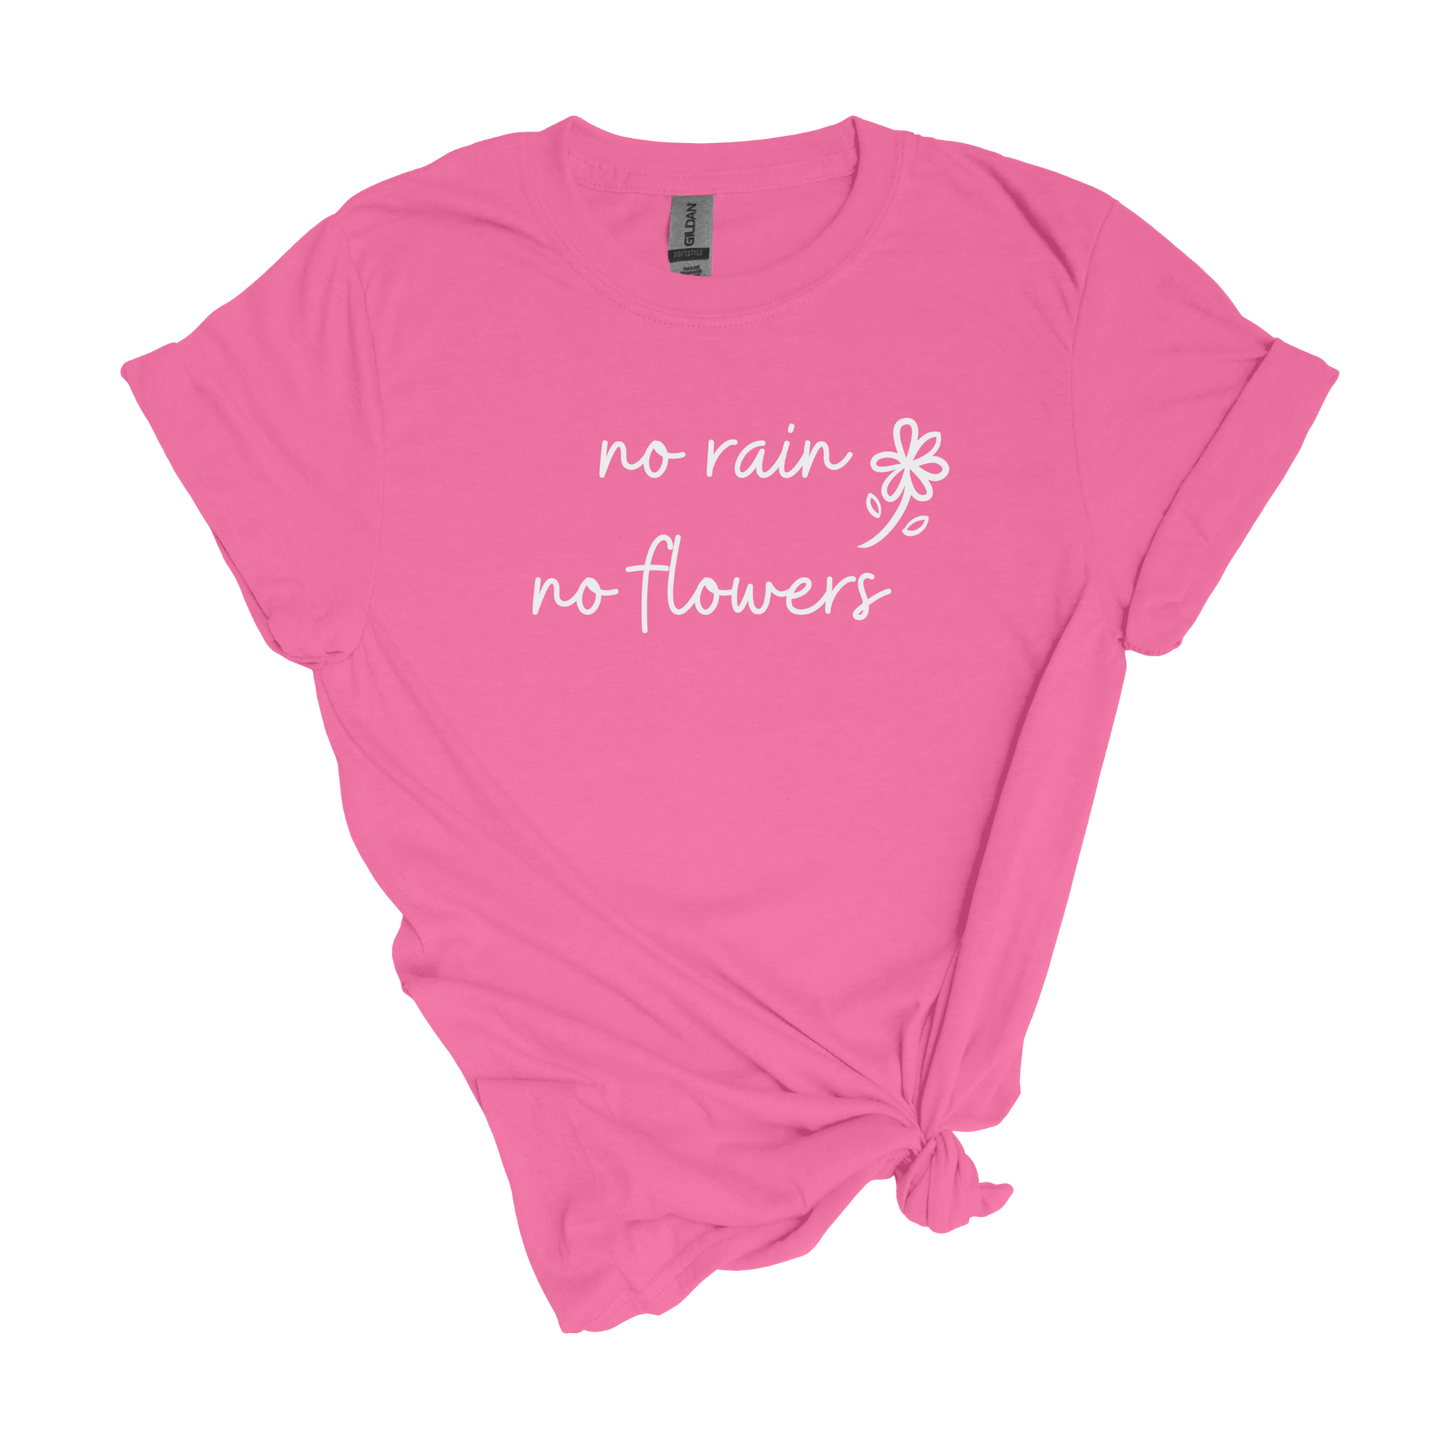 No Rain, No Flowers - Adult Unisex Soft Inspirational T-shirt